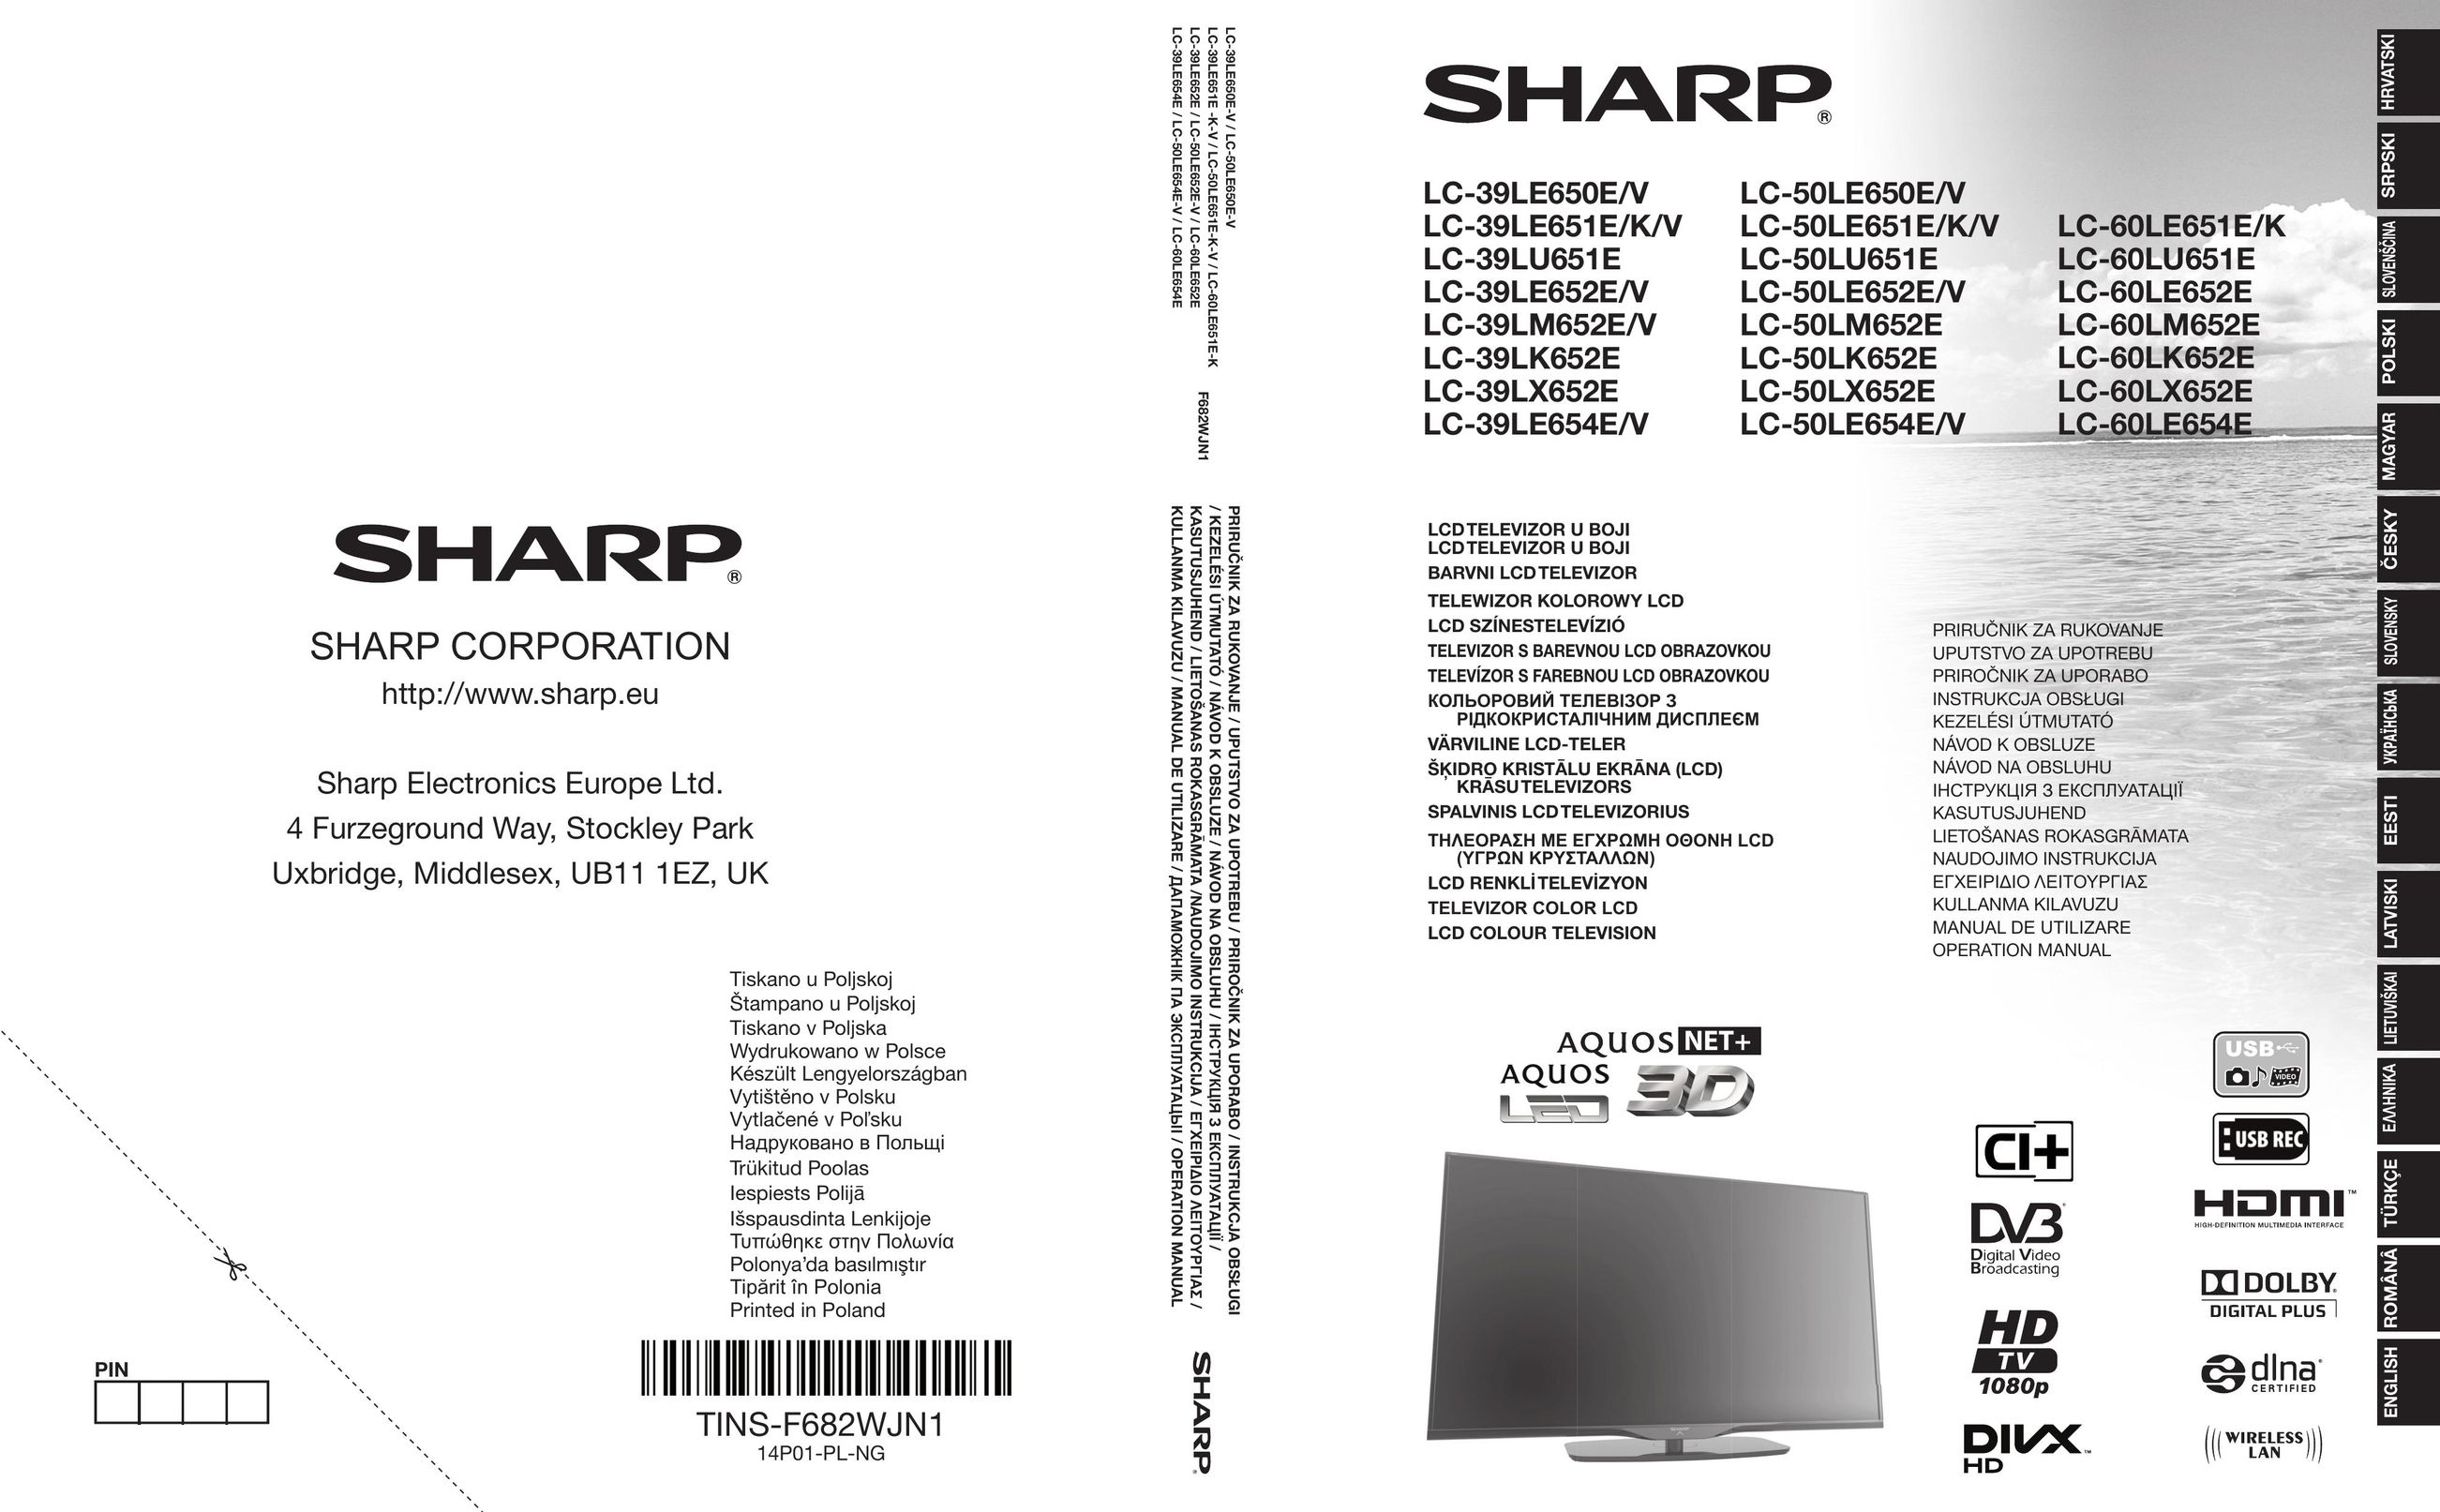 Sharp LC-60LK652E Car Video System User Manual